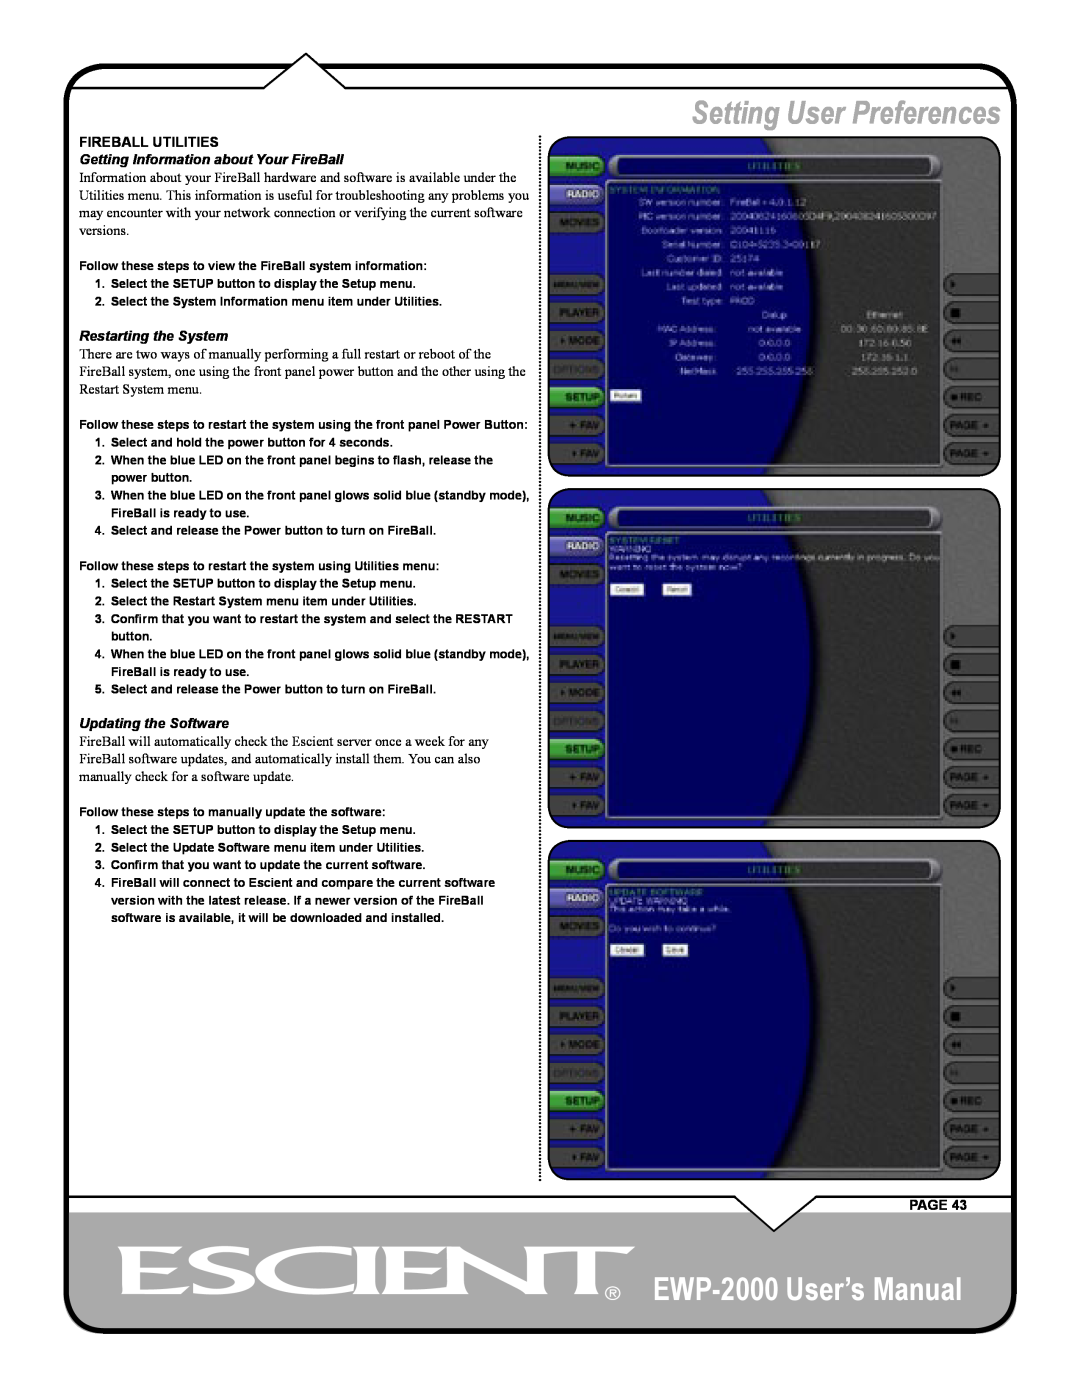 Escient user manual Setting User Preferences, EWP-2000 User’s Manual, Fireball Utilities, Page 